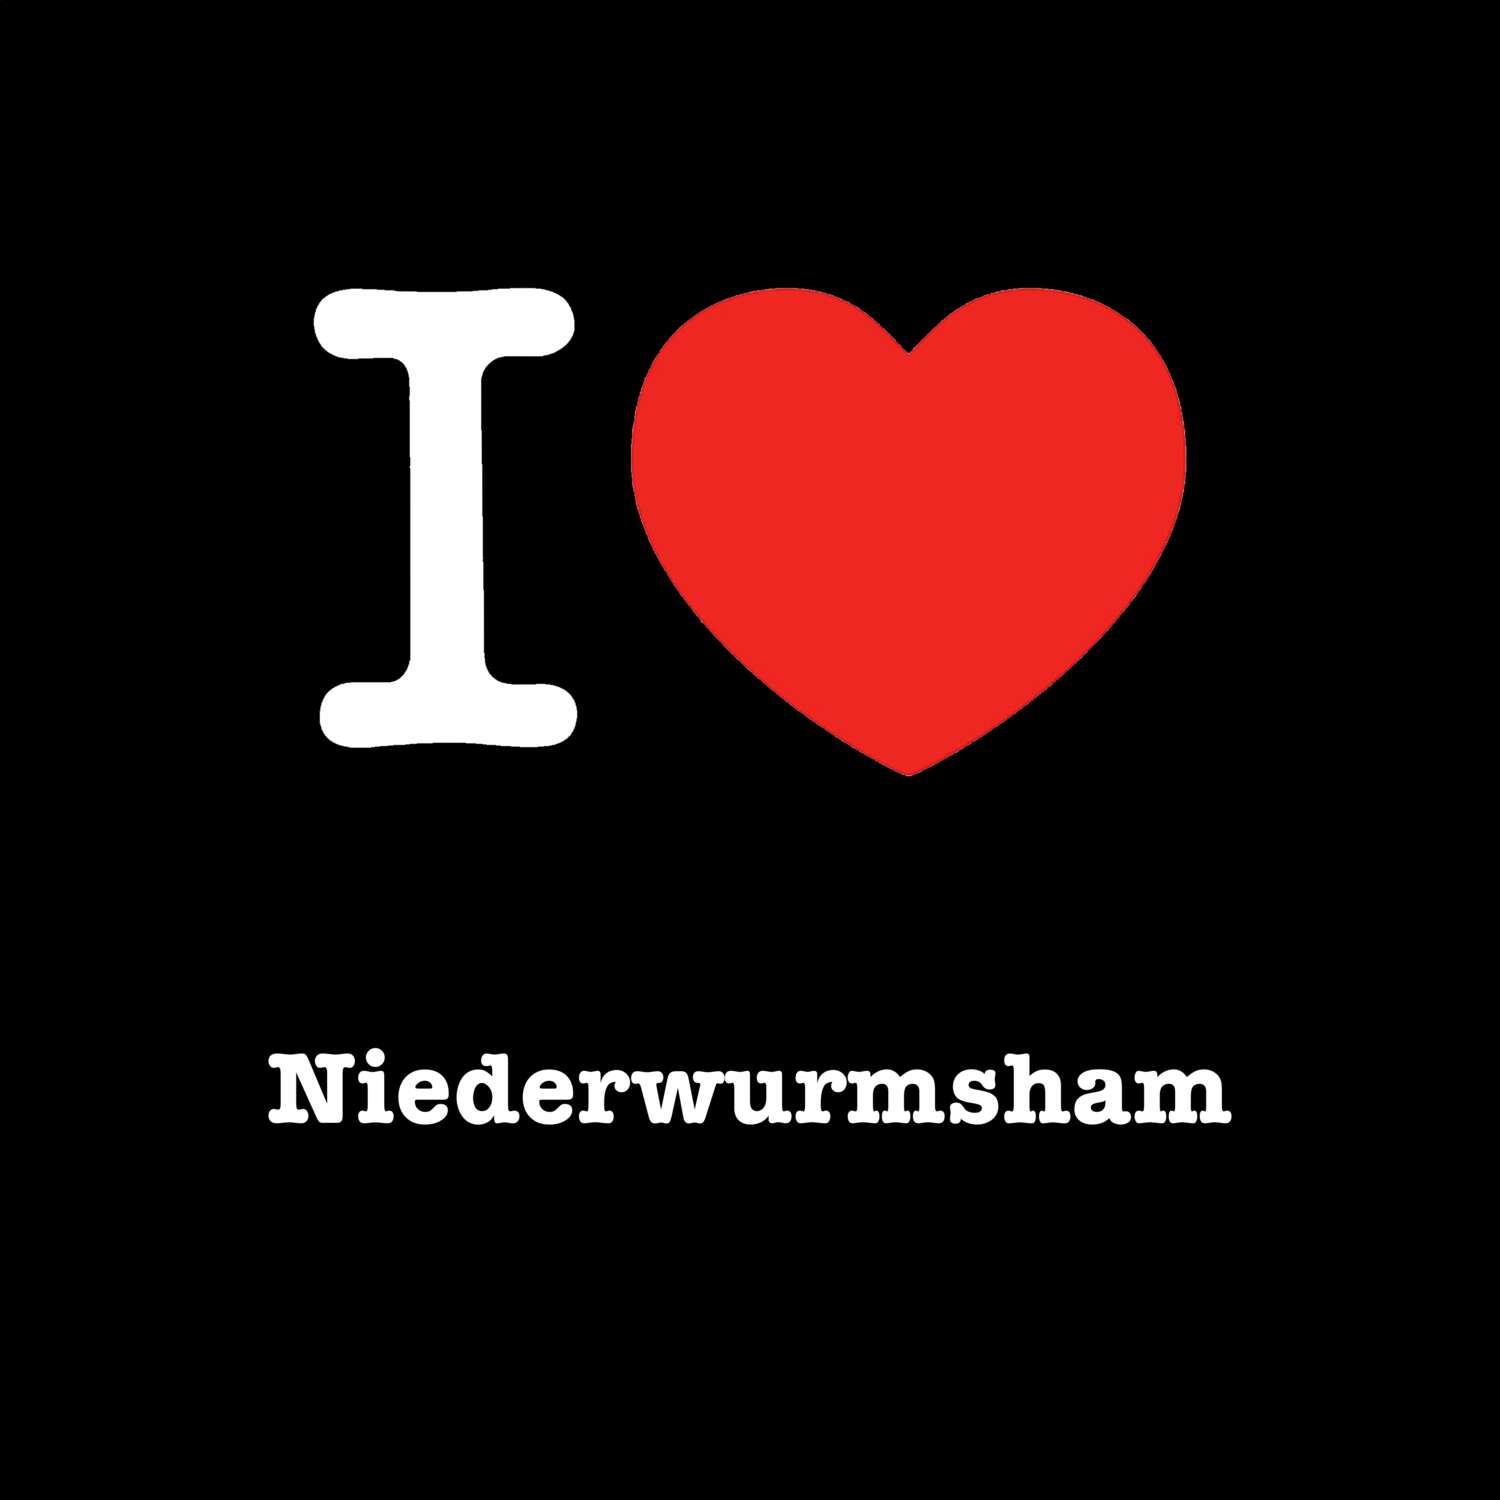 Niederwurmsham T-Shirt »I love«